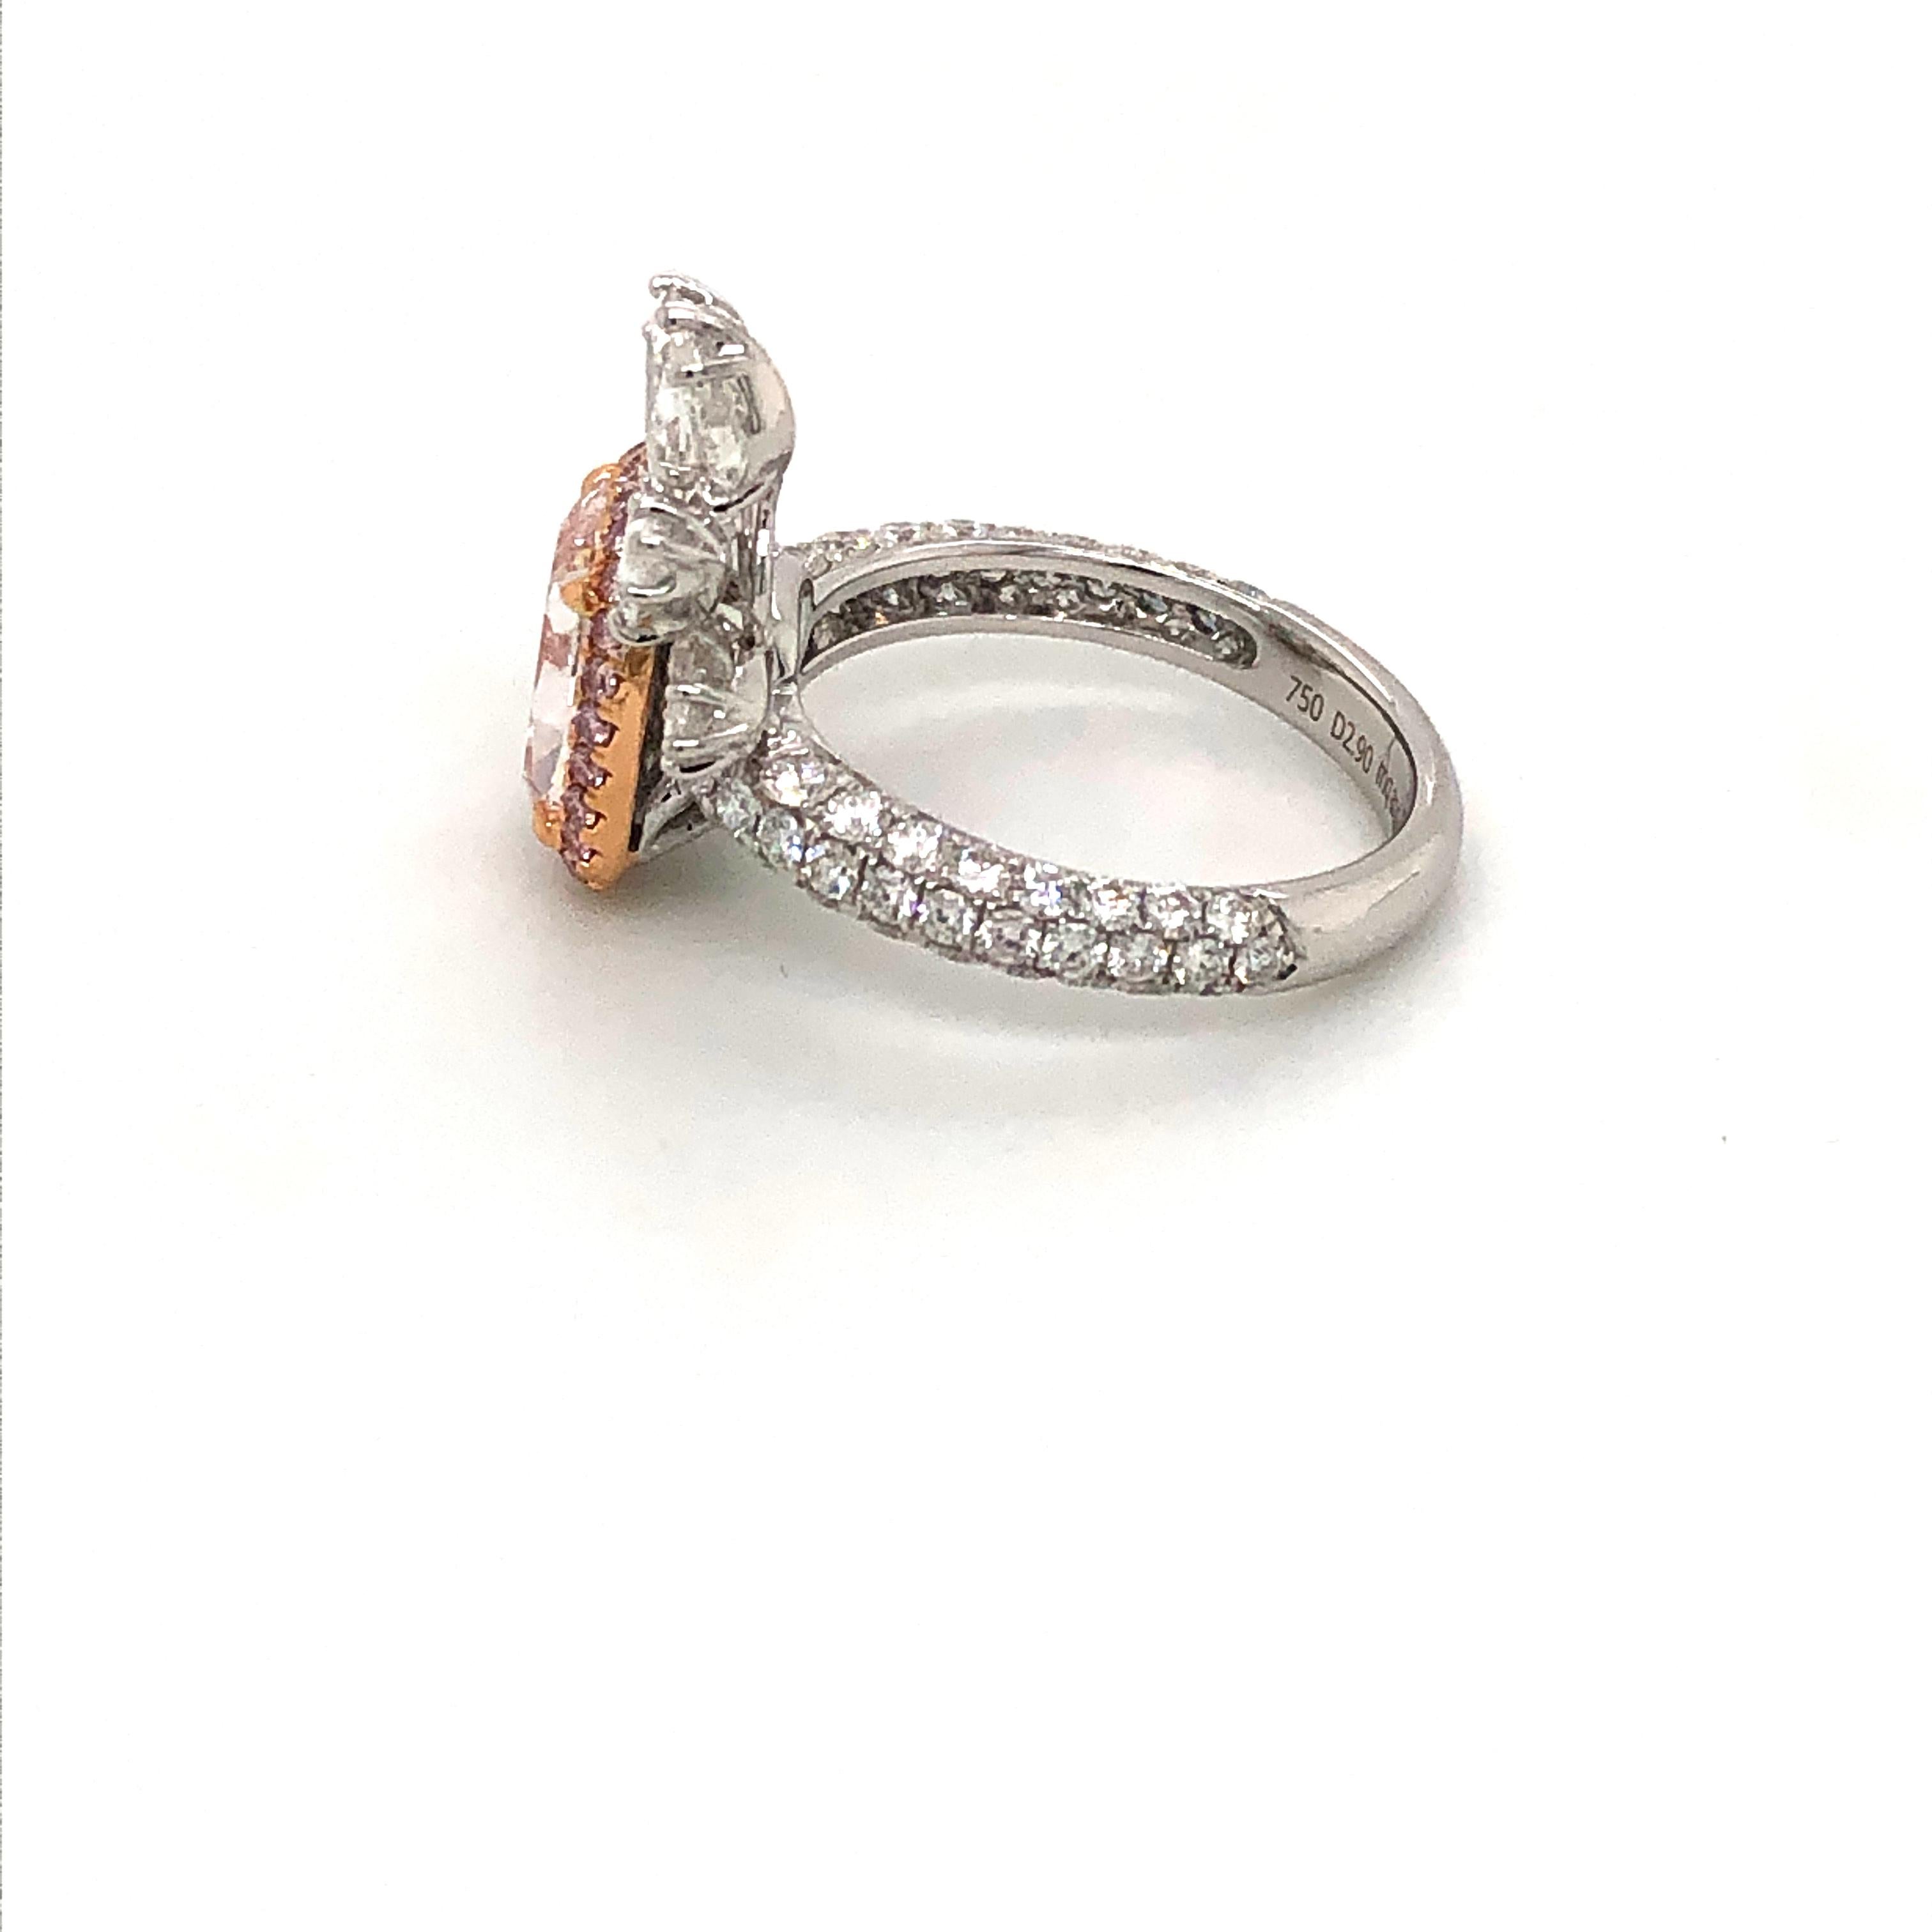 Contemporary 2.90 Carat Fancy Light Pink Cushion Cut Diamond Ring in Platinum GIA VS2